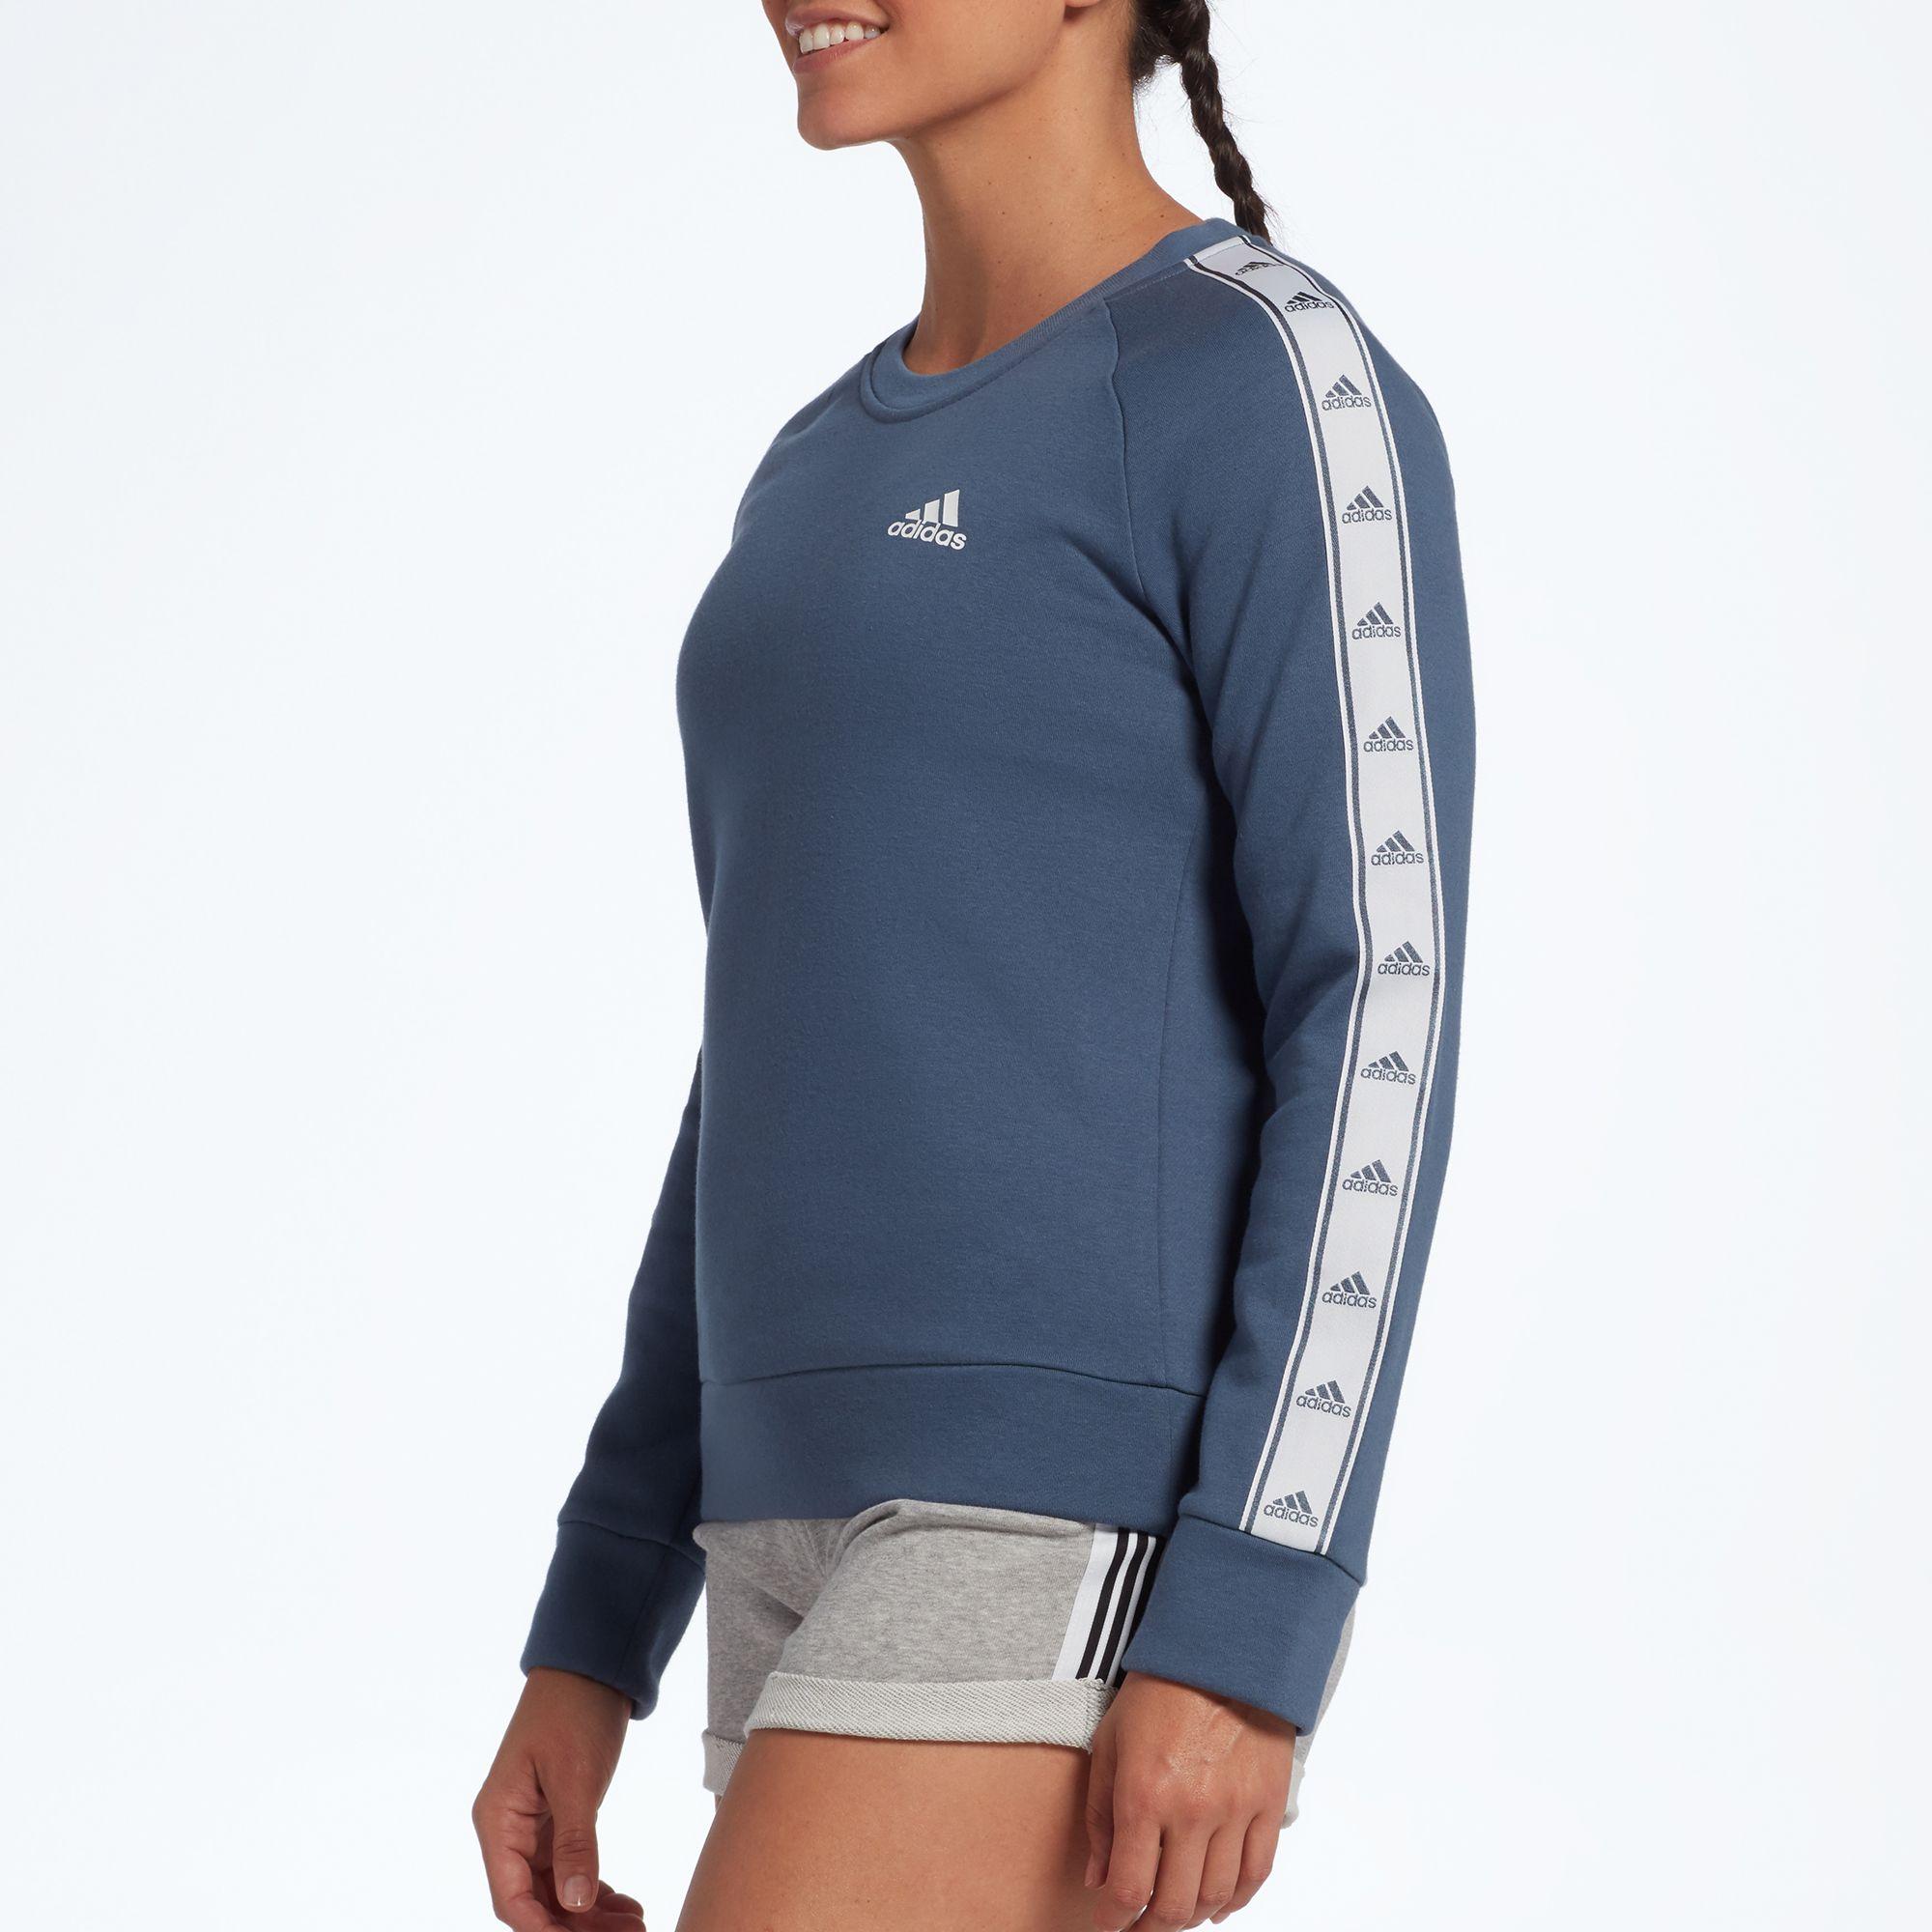 Adidas Cotton Tiro Tape Crewneck Sweatshirt In Blue - Lyst-4331